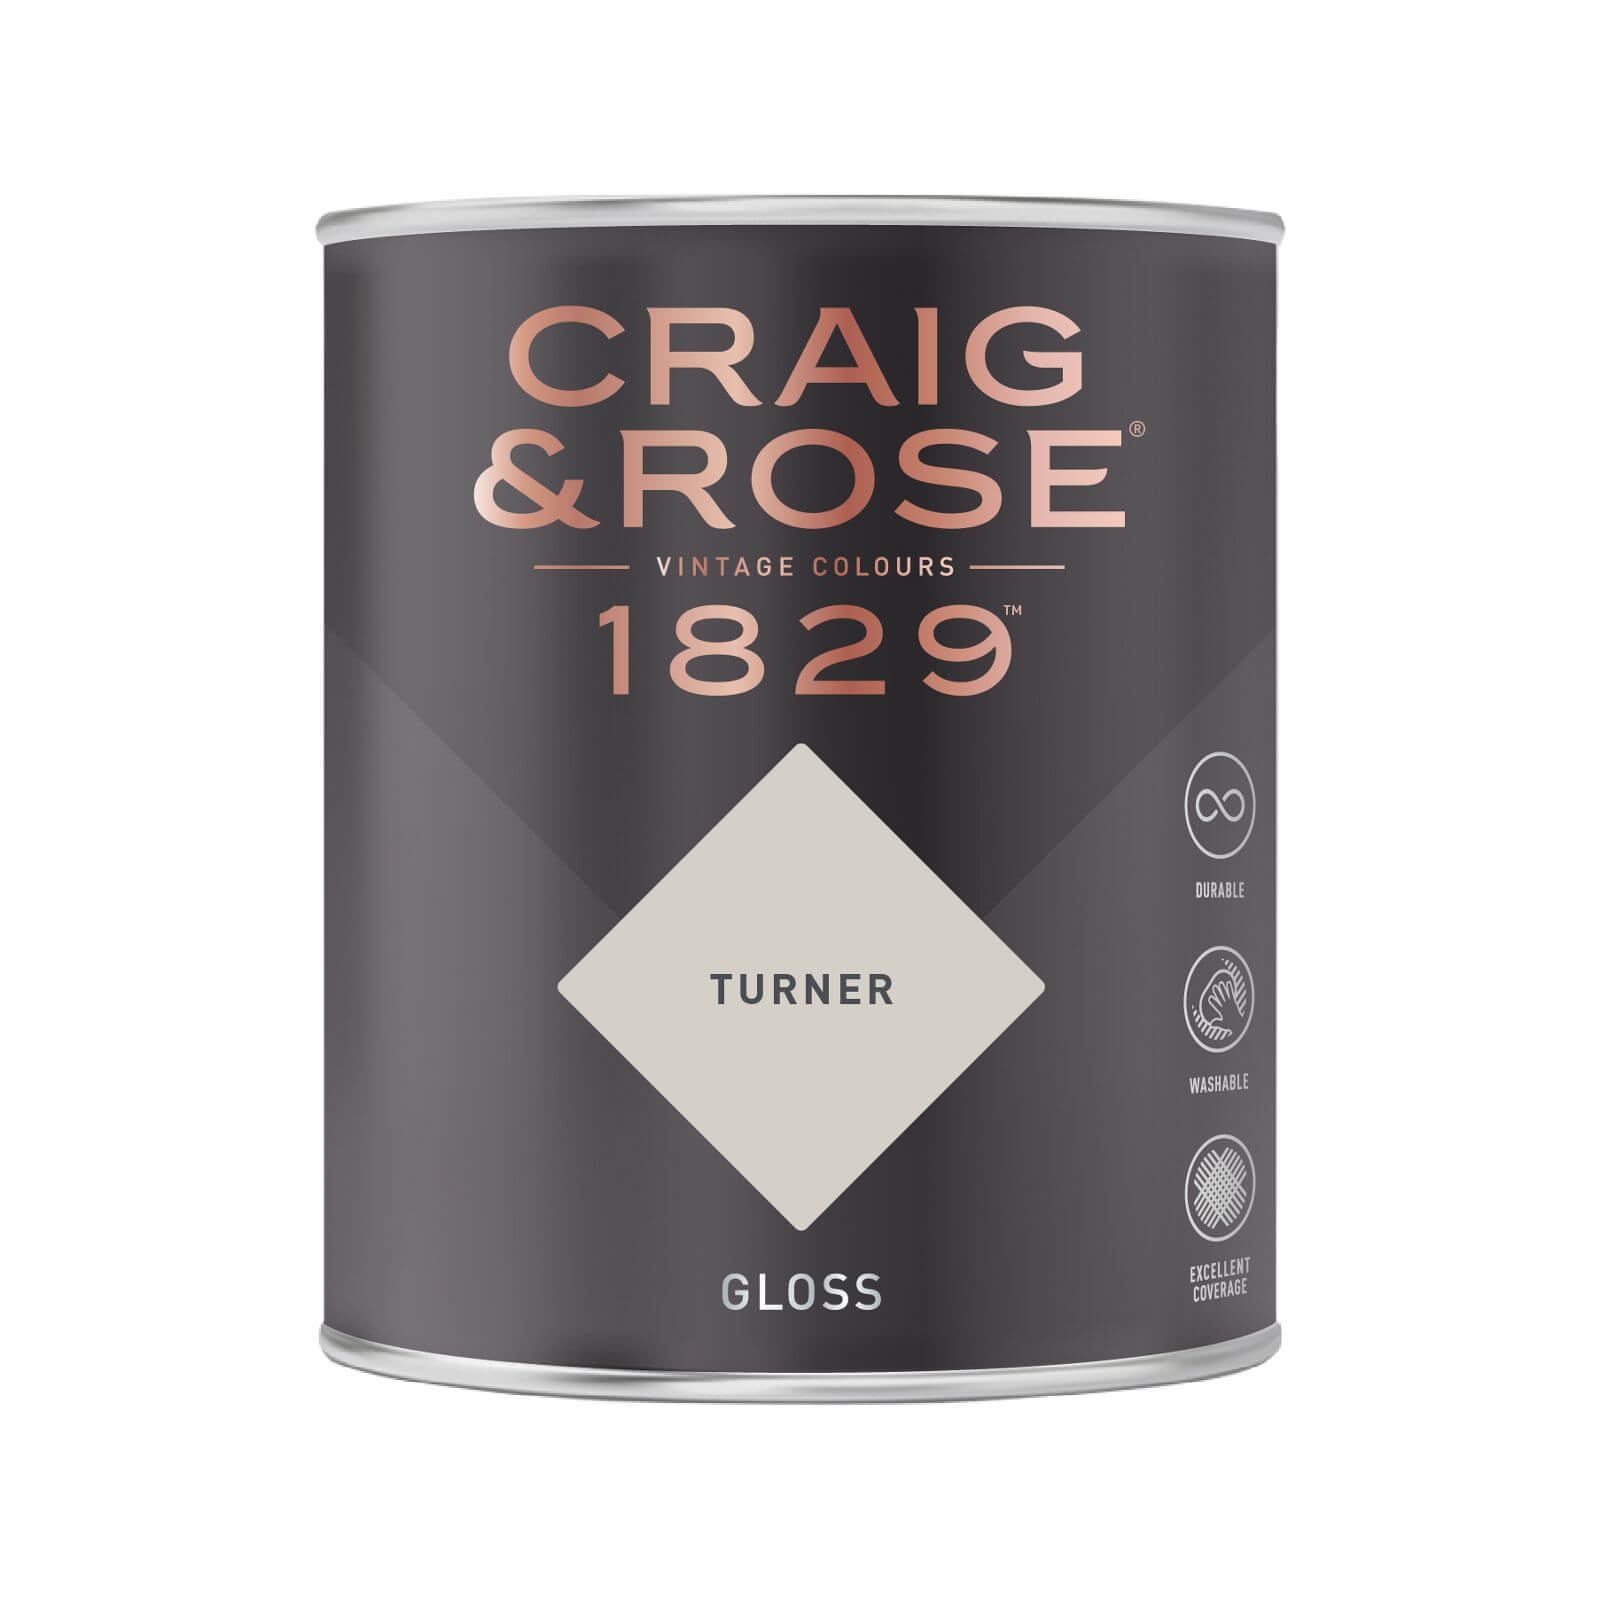 Craig & Rose 1829 Gloss Paint Turner - 750ml